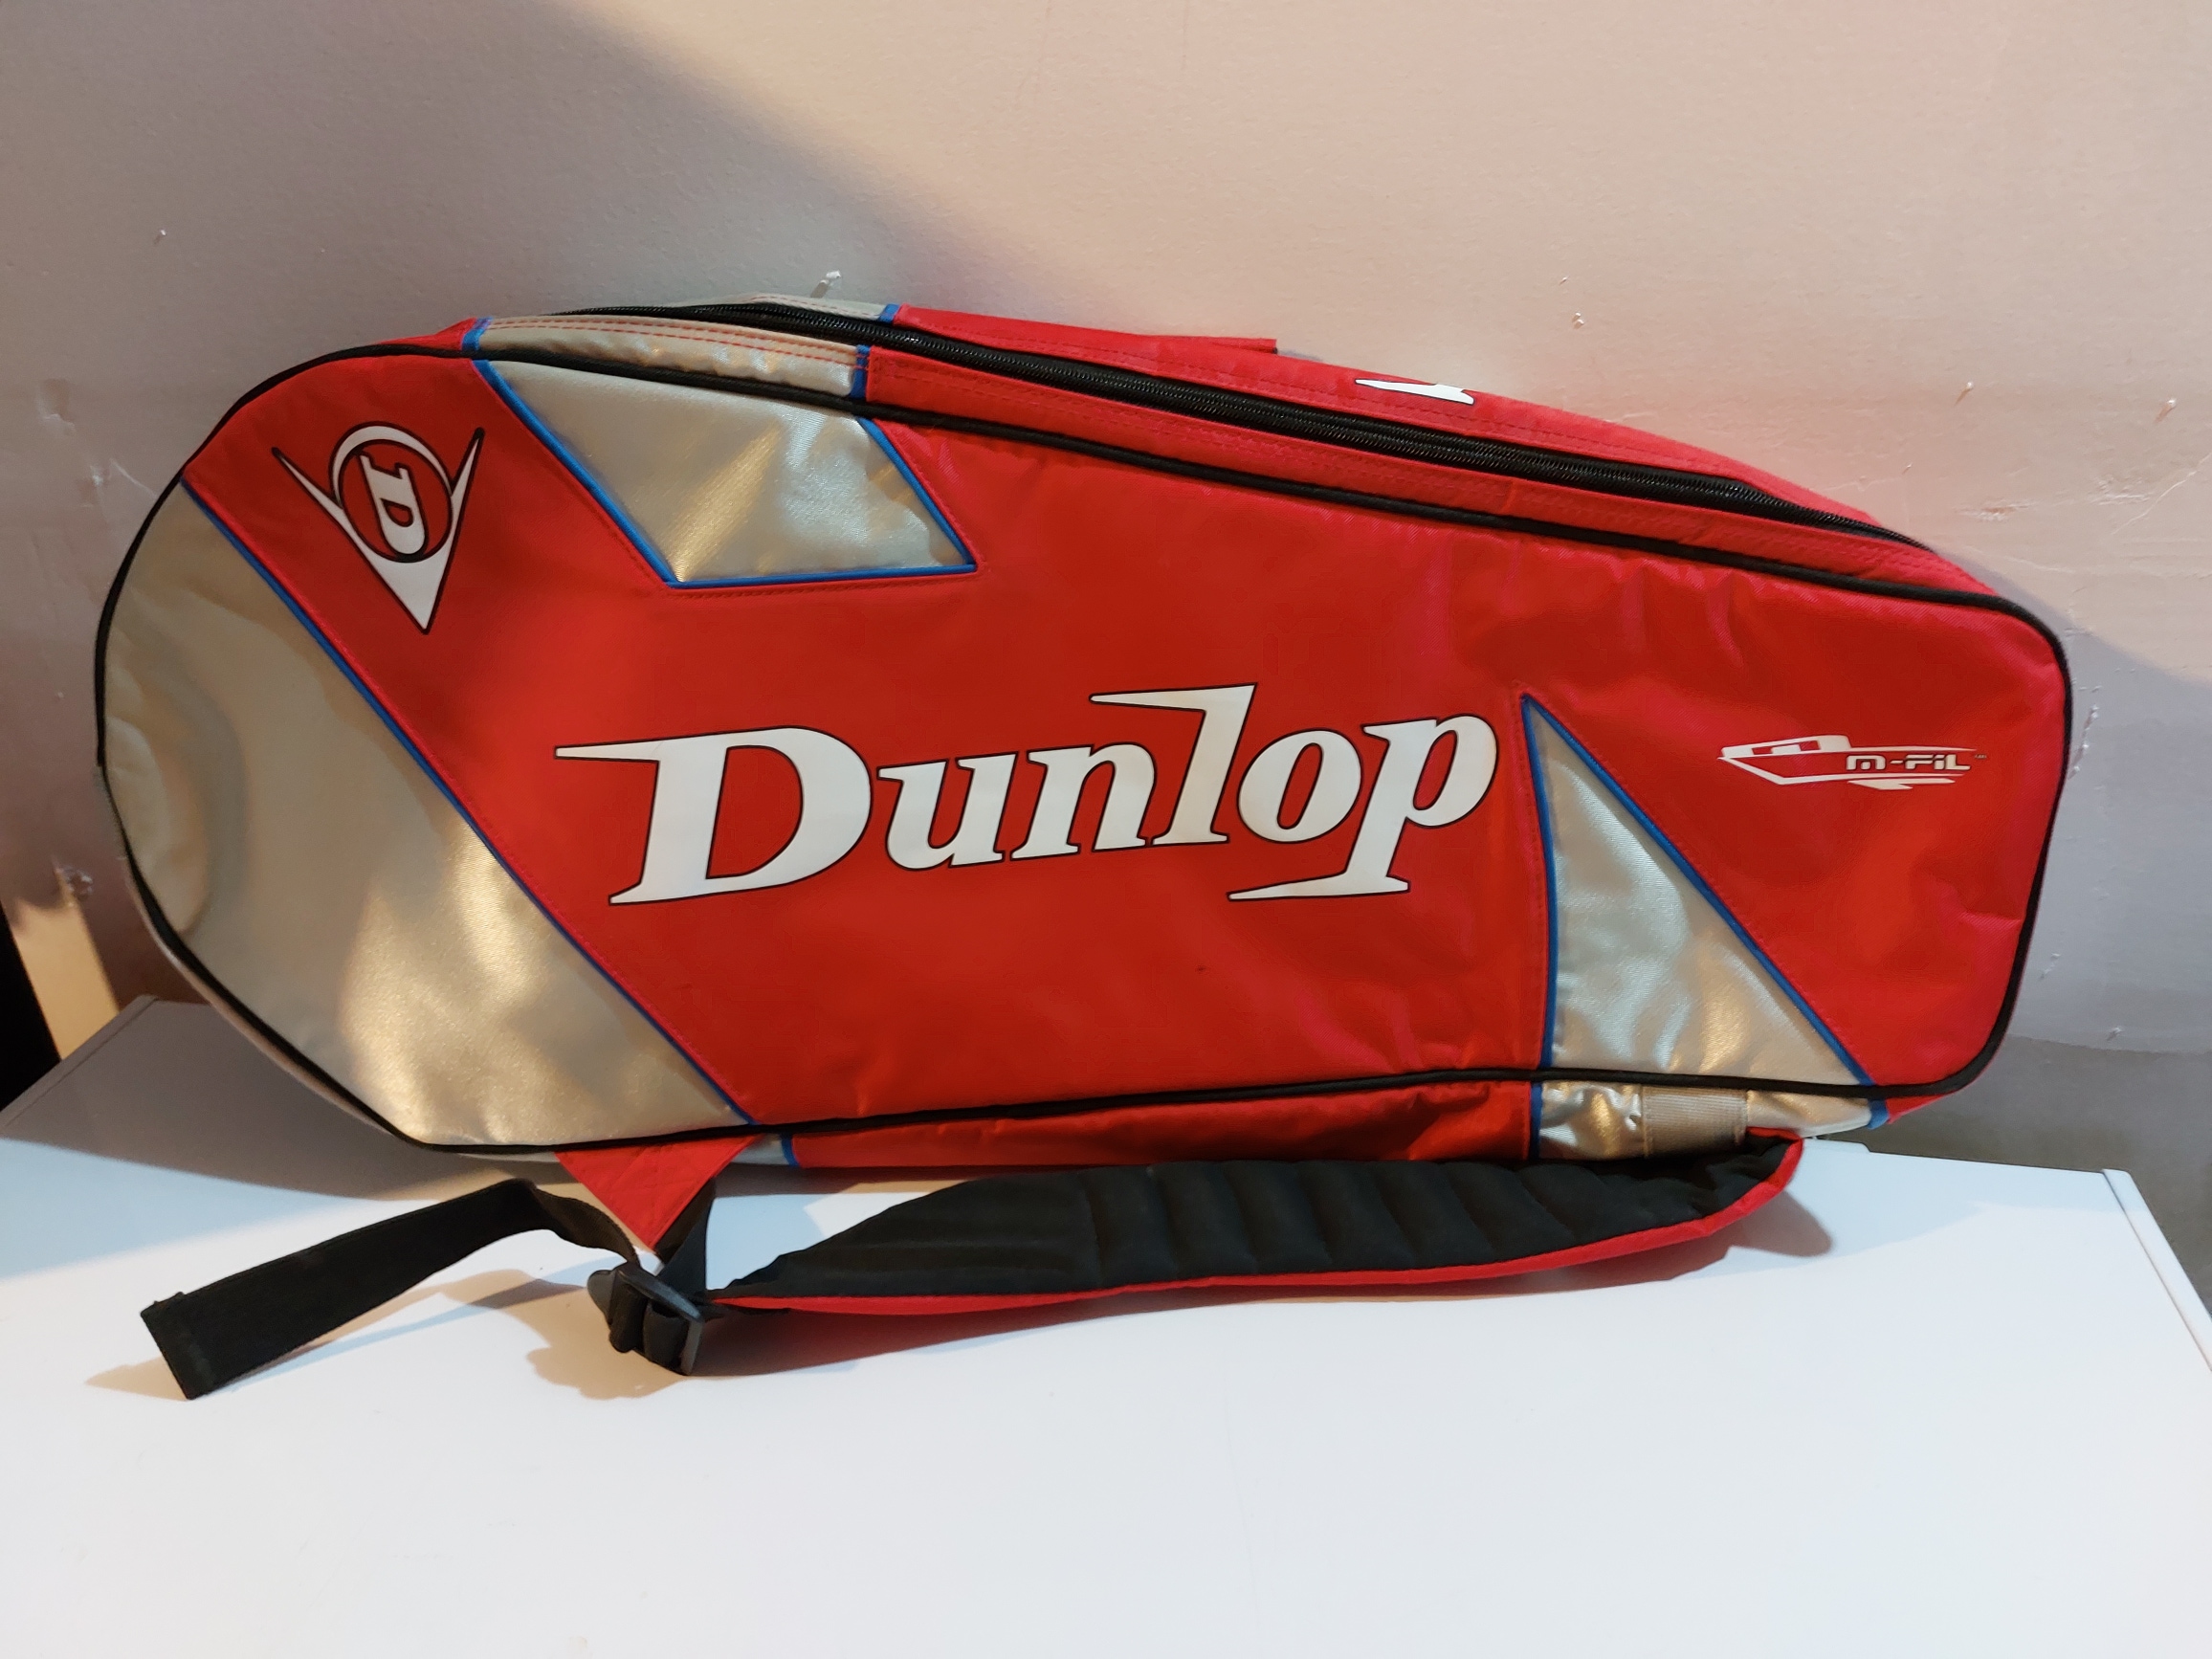 Dunlop Squash Bag (never used)